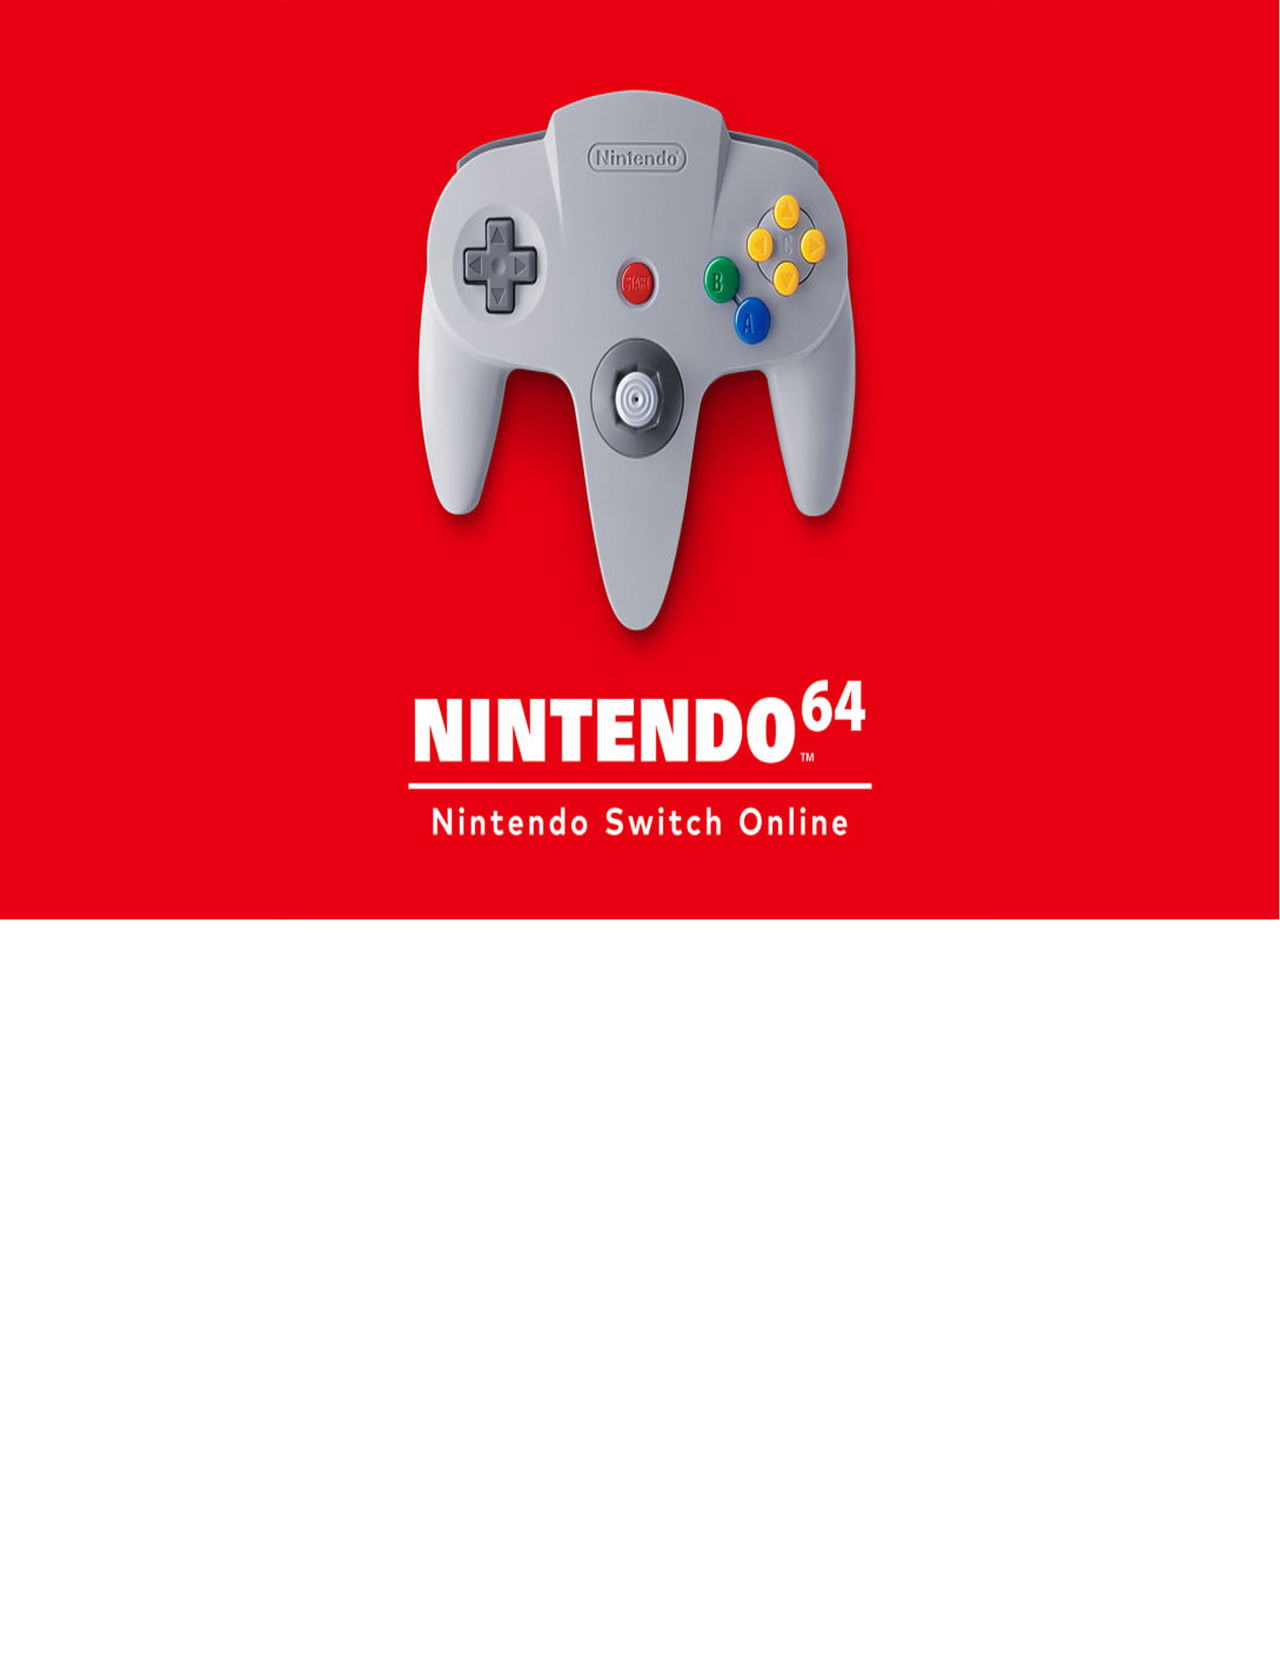 Nintendo 64 Nintendo Switch template by PeruAlonso on DeviantArt